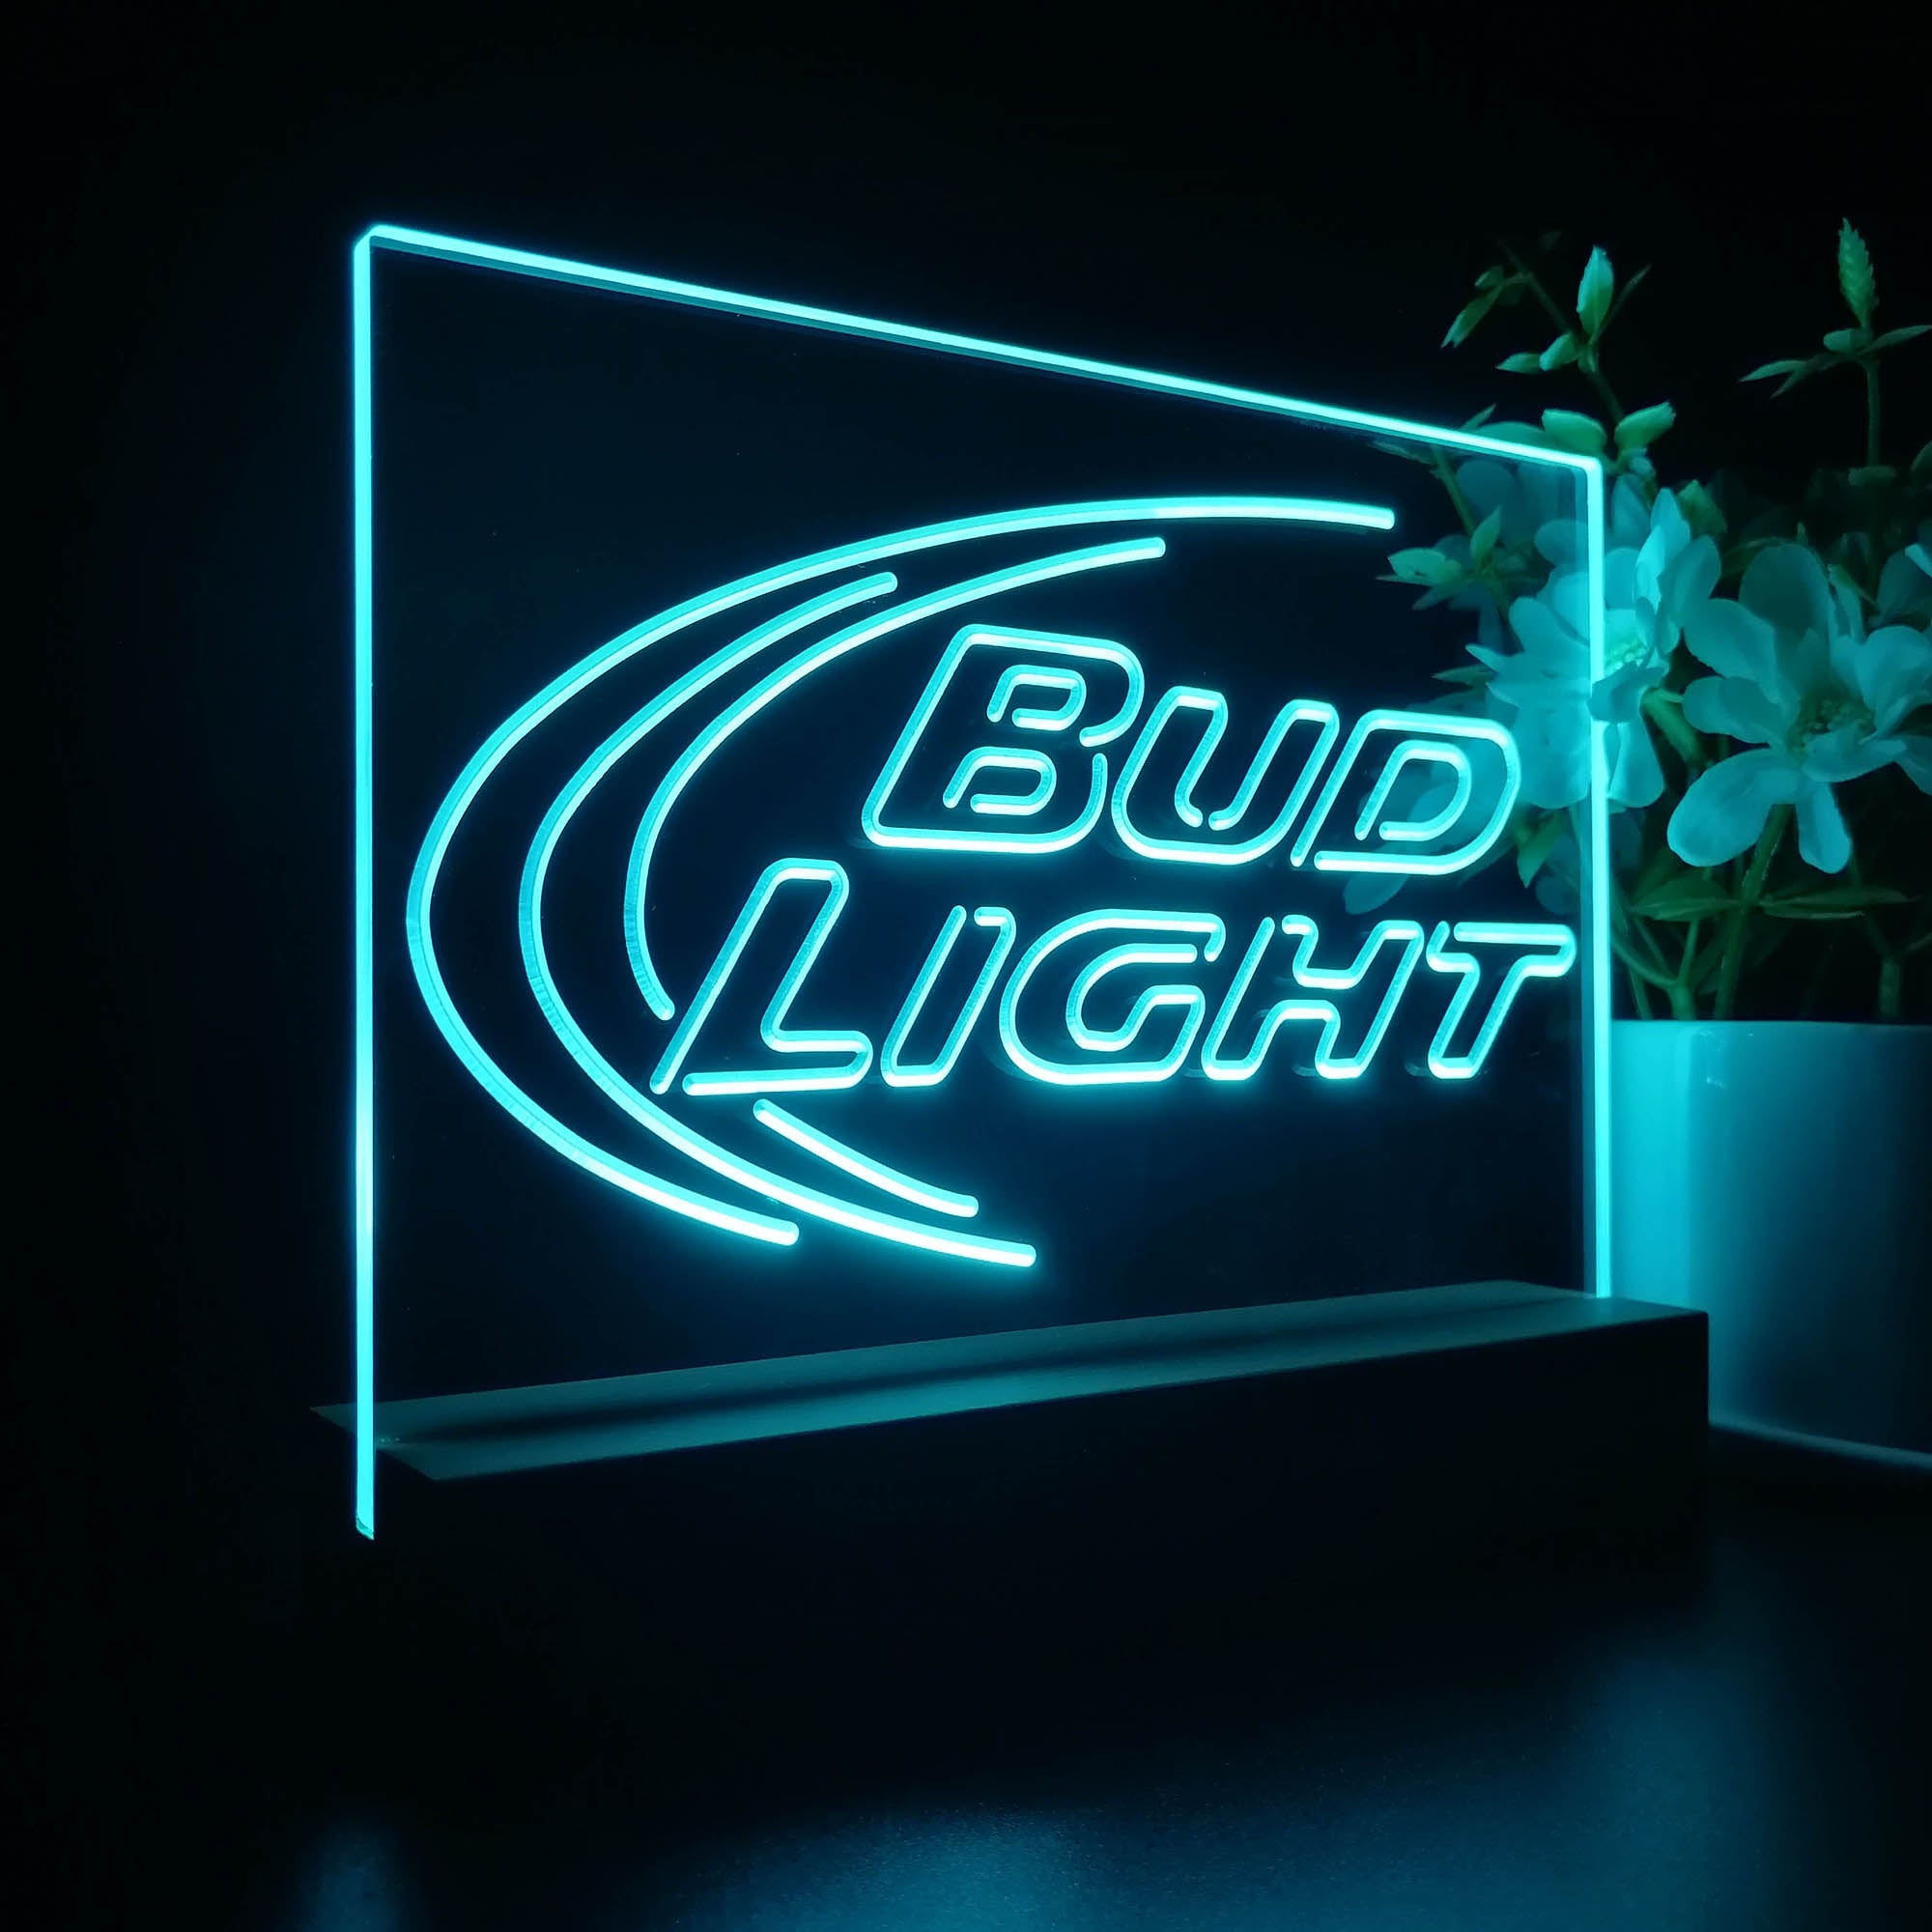 Bud Light Beer Ice Bar Neon Sign Pub Bar Lamp